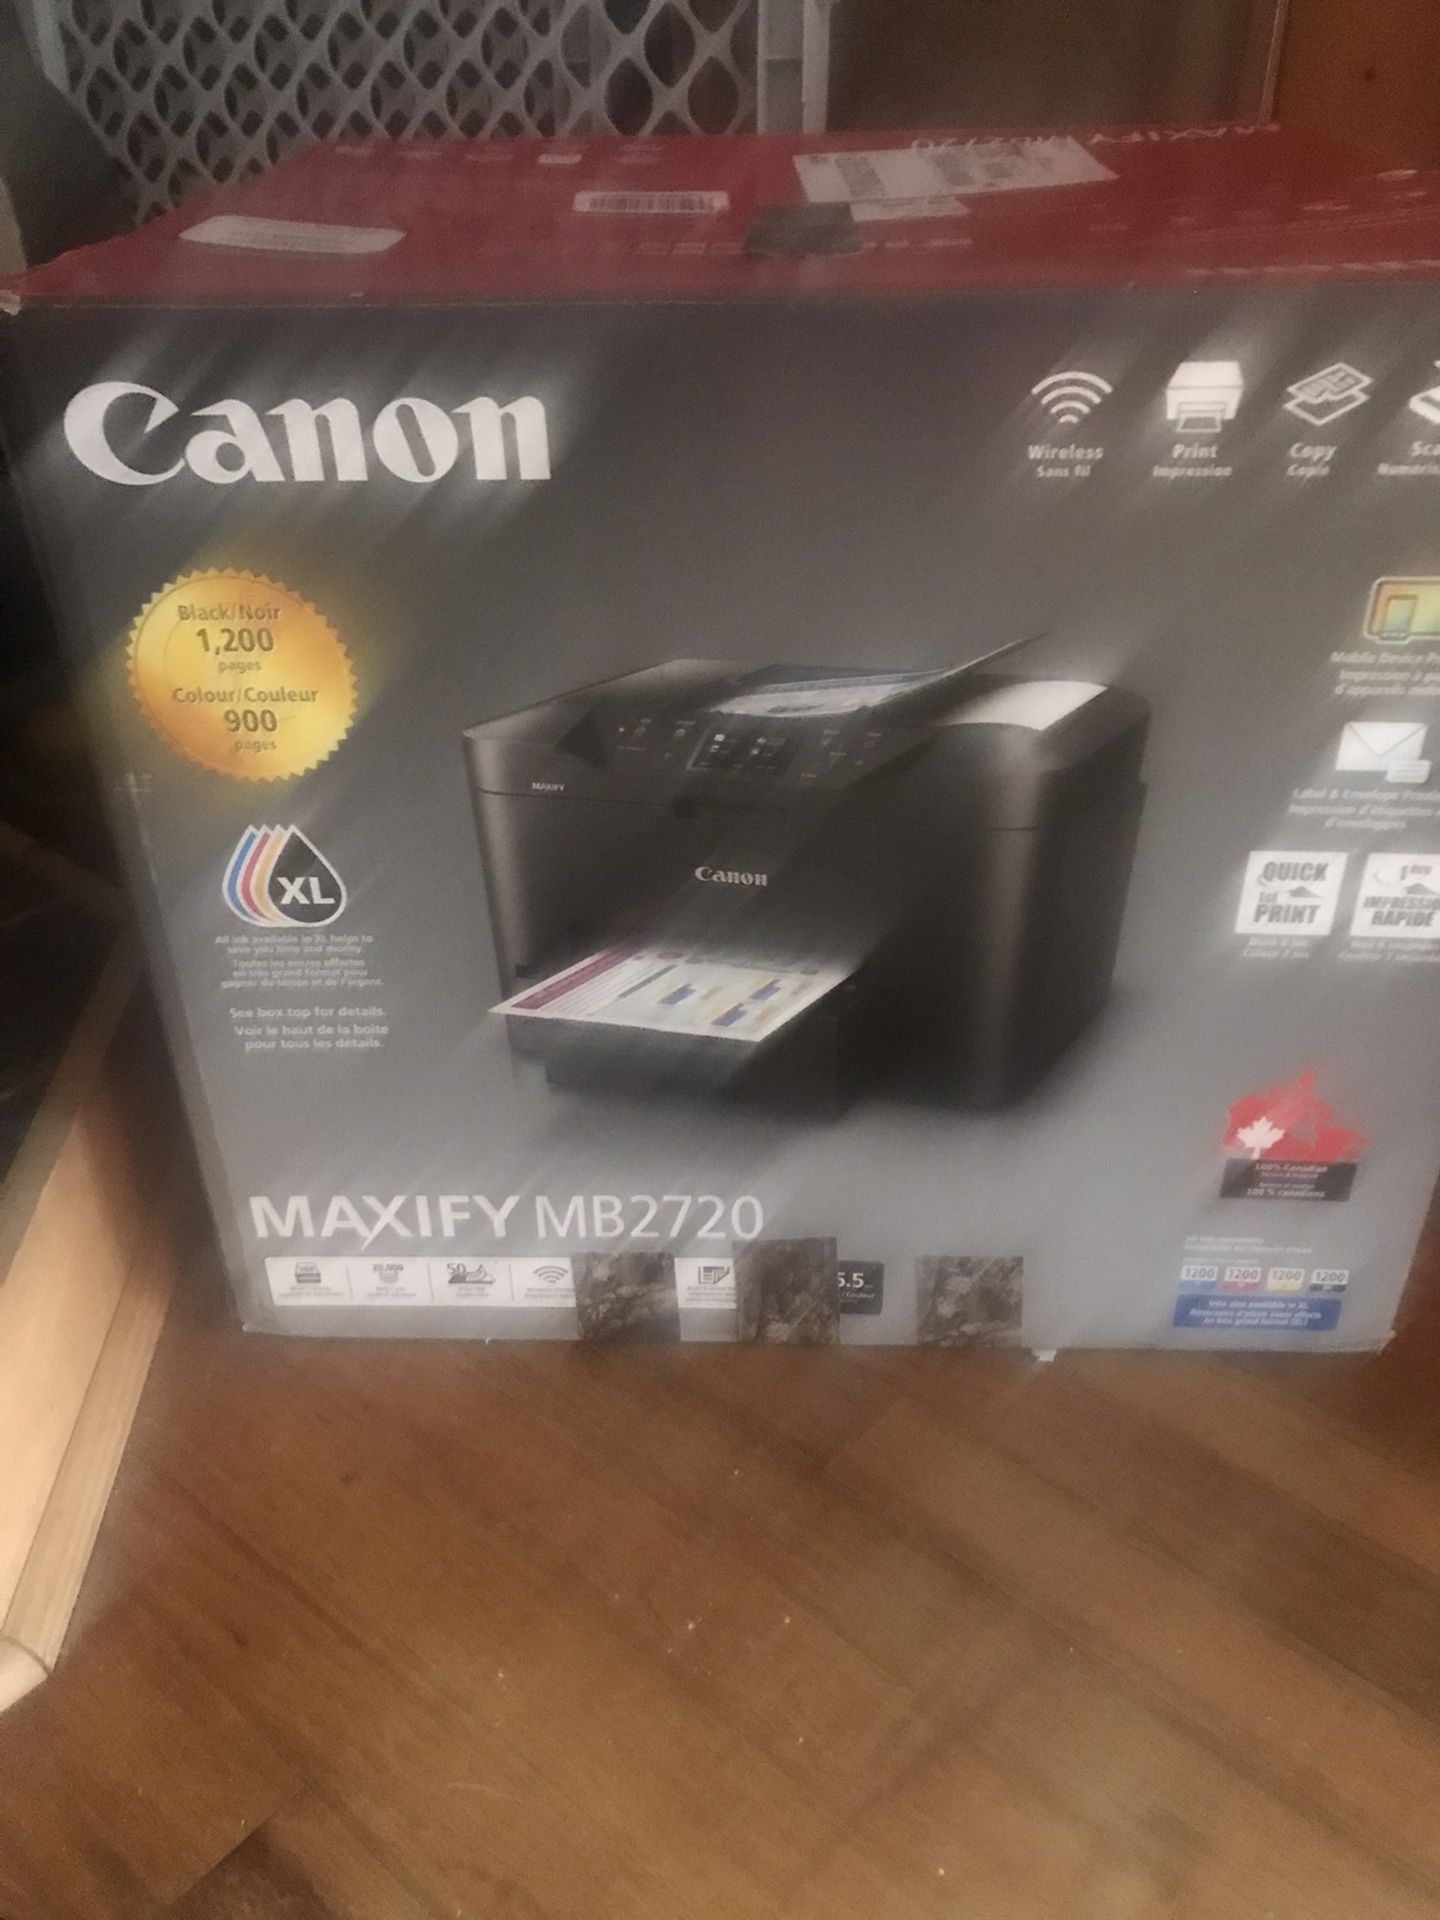 Canon Printer/Scanner/Fax 